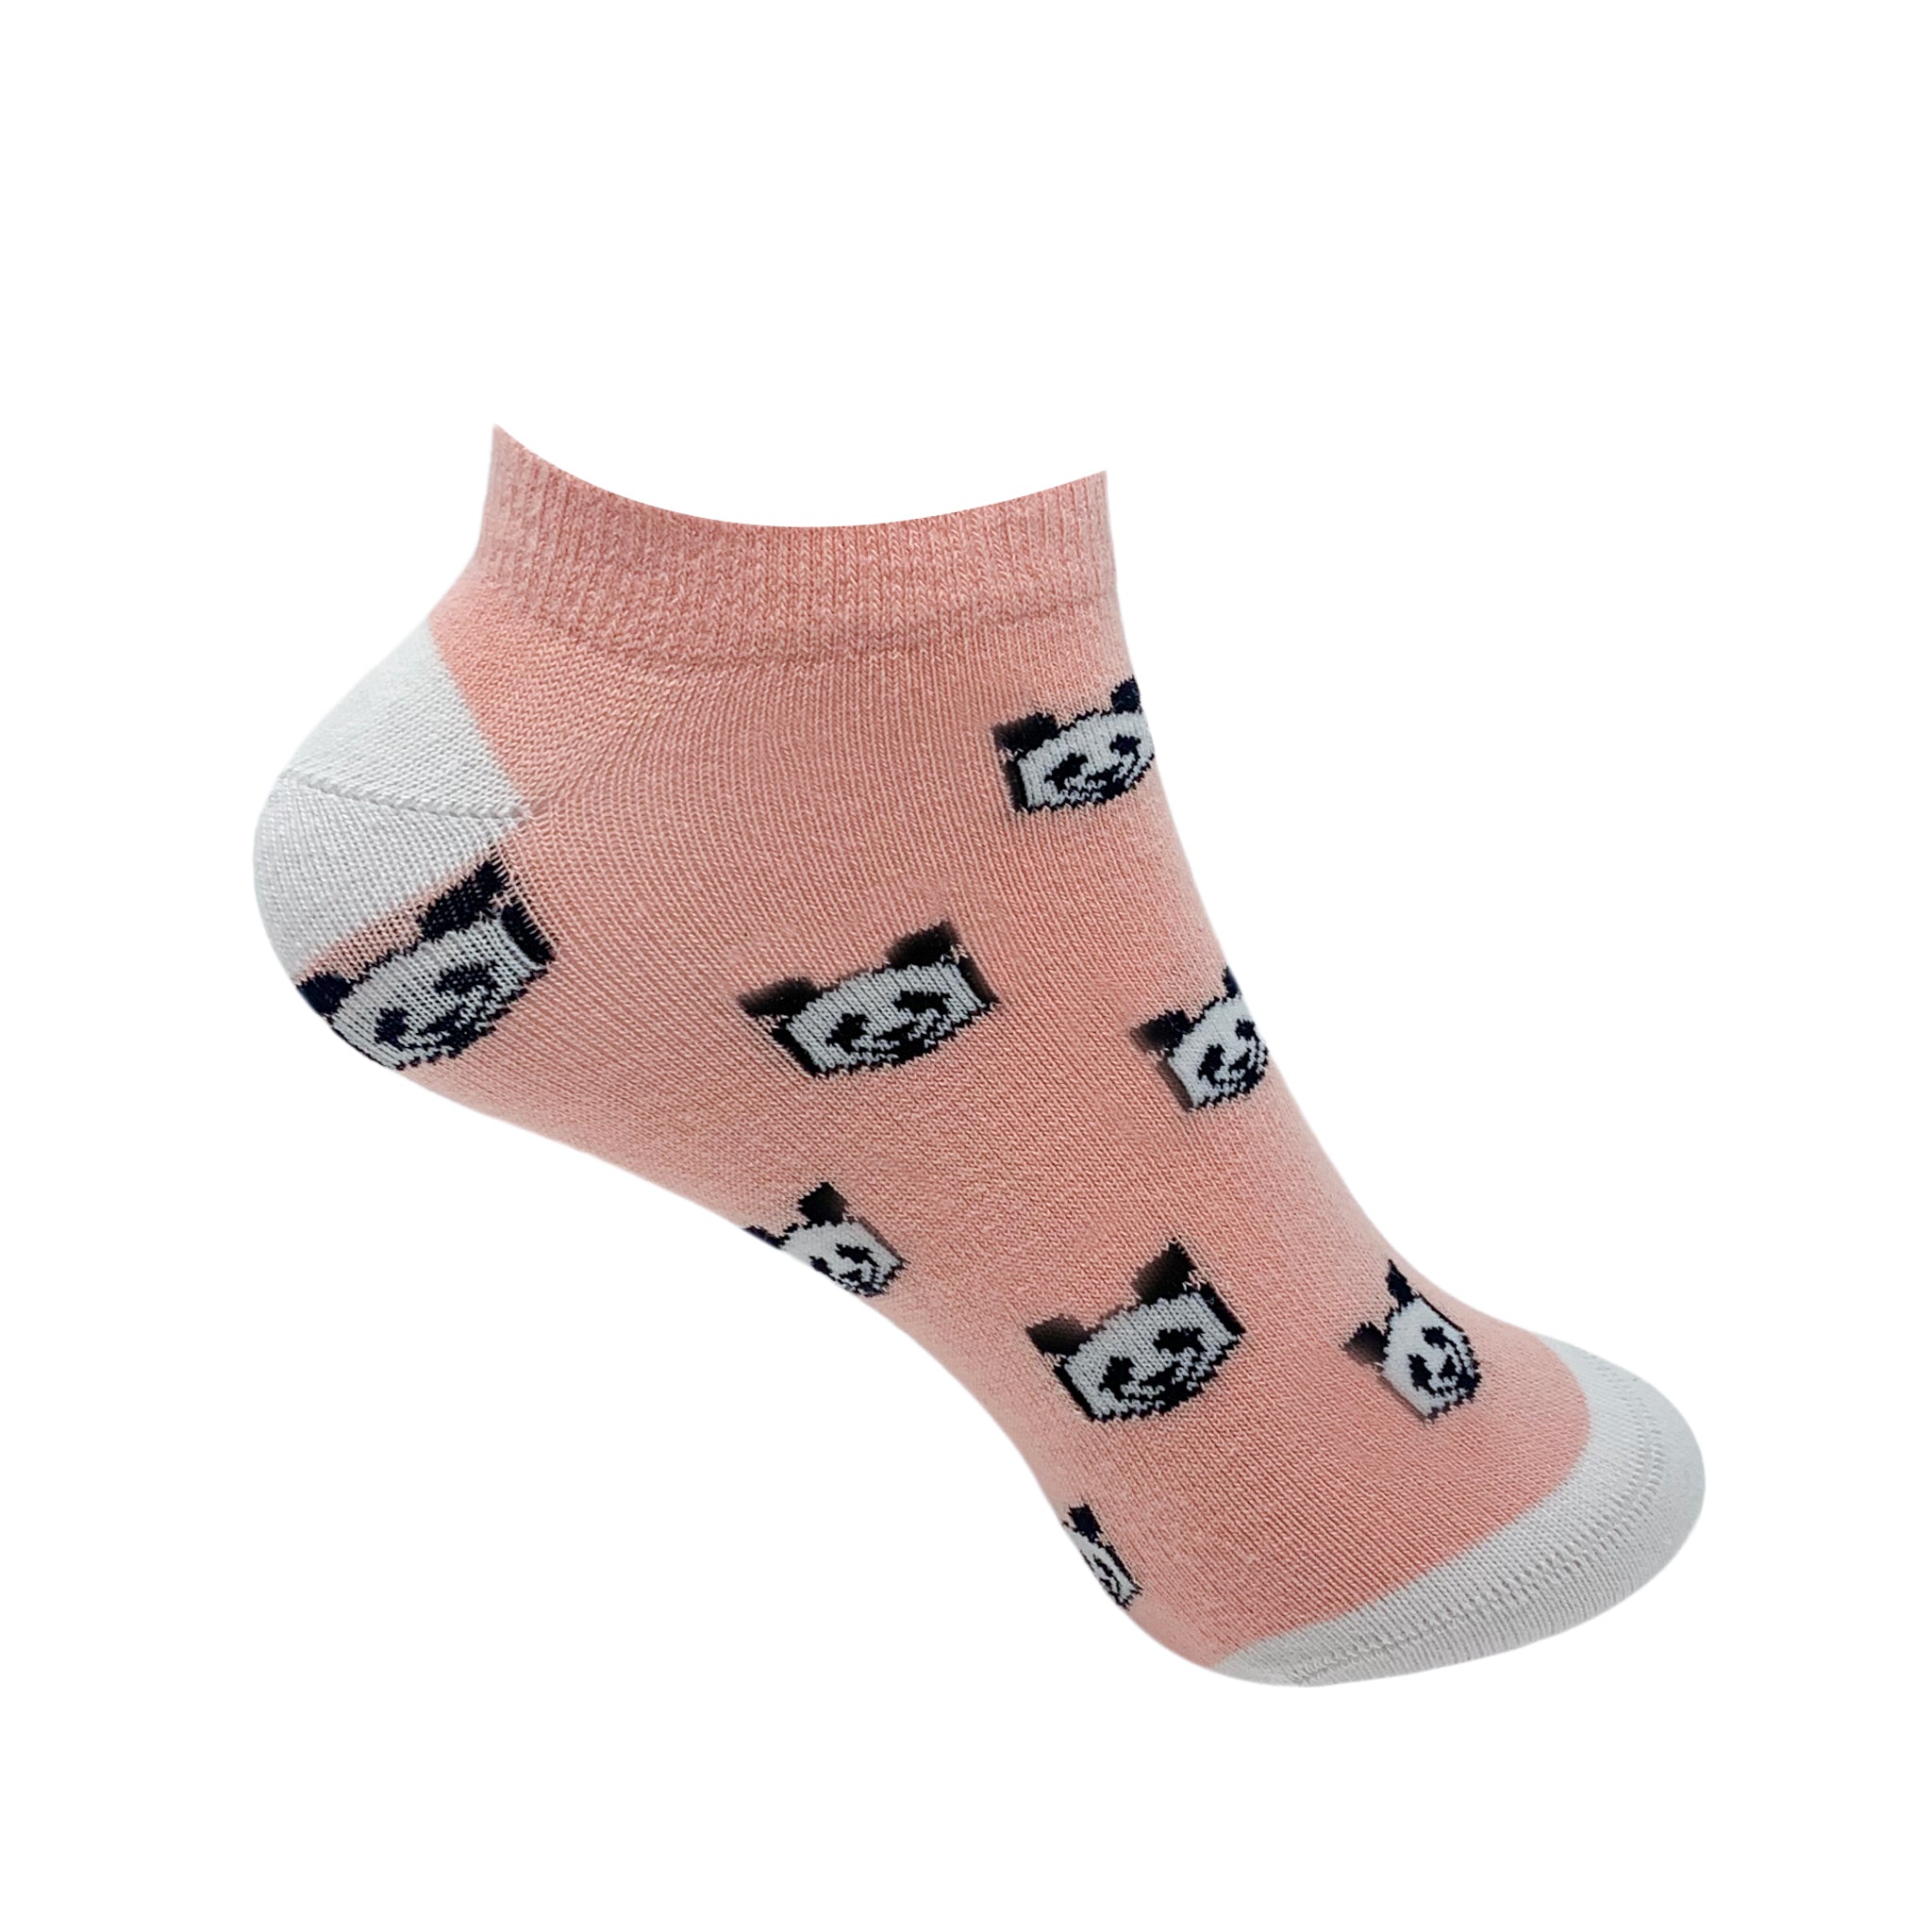 Pandastic Socks For Women